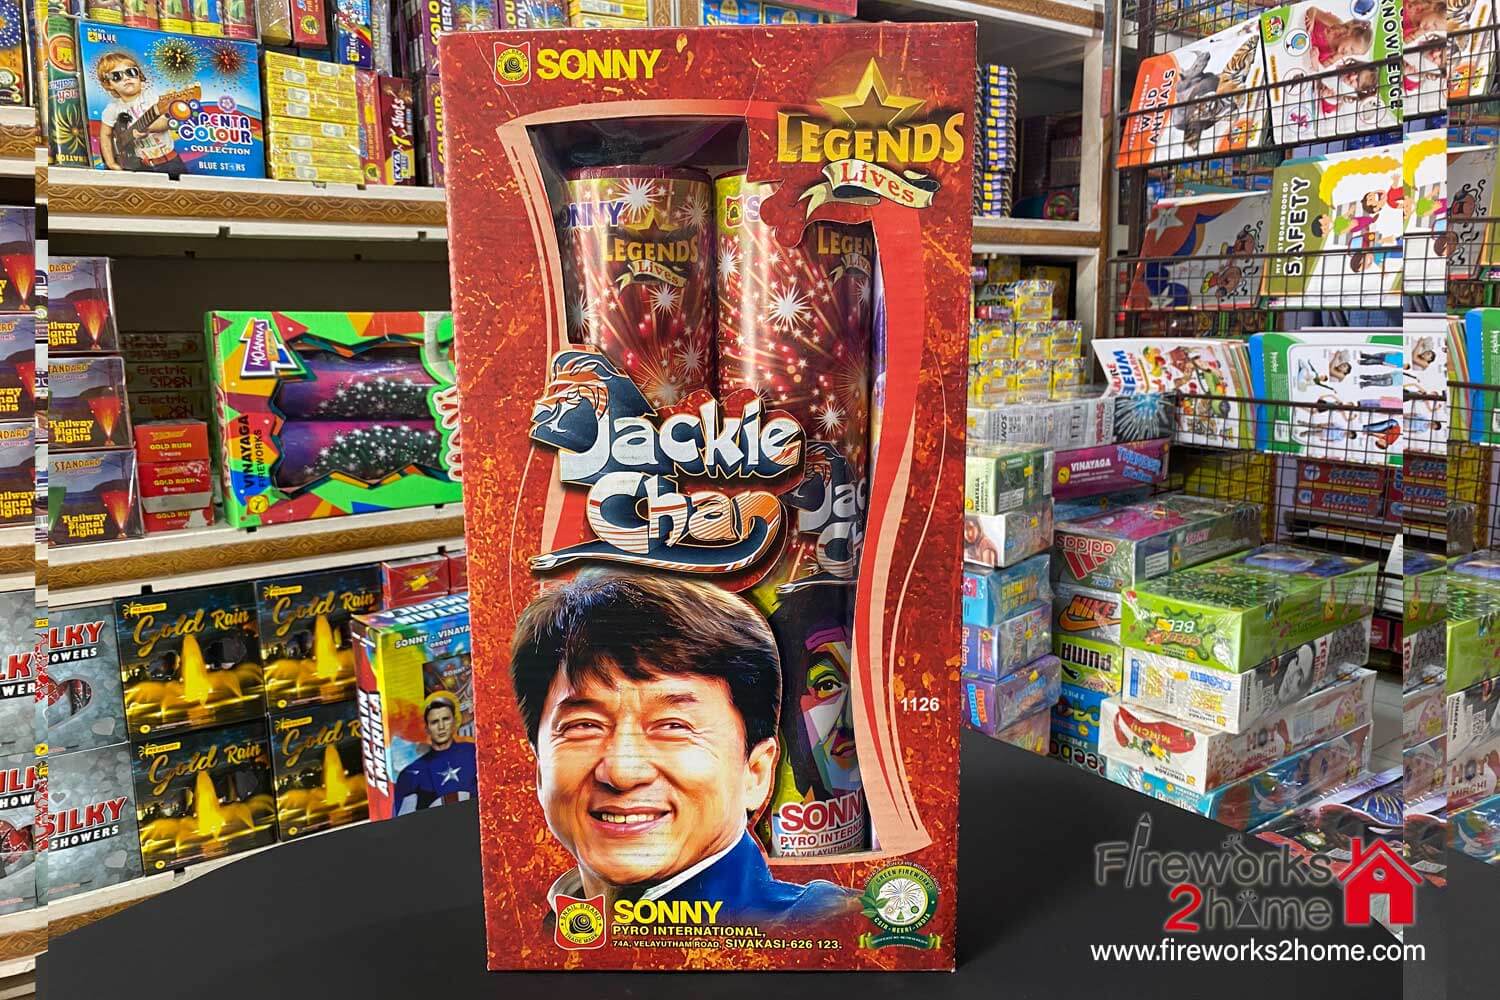 Jackie Chan Sky Shot by Sony (pieces per box 2)